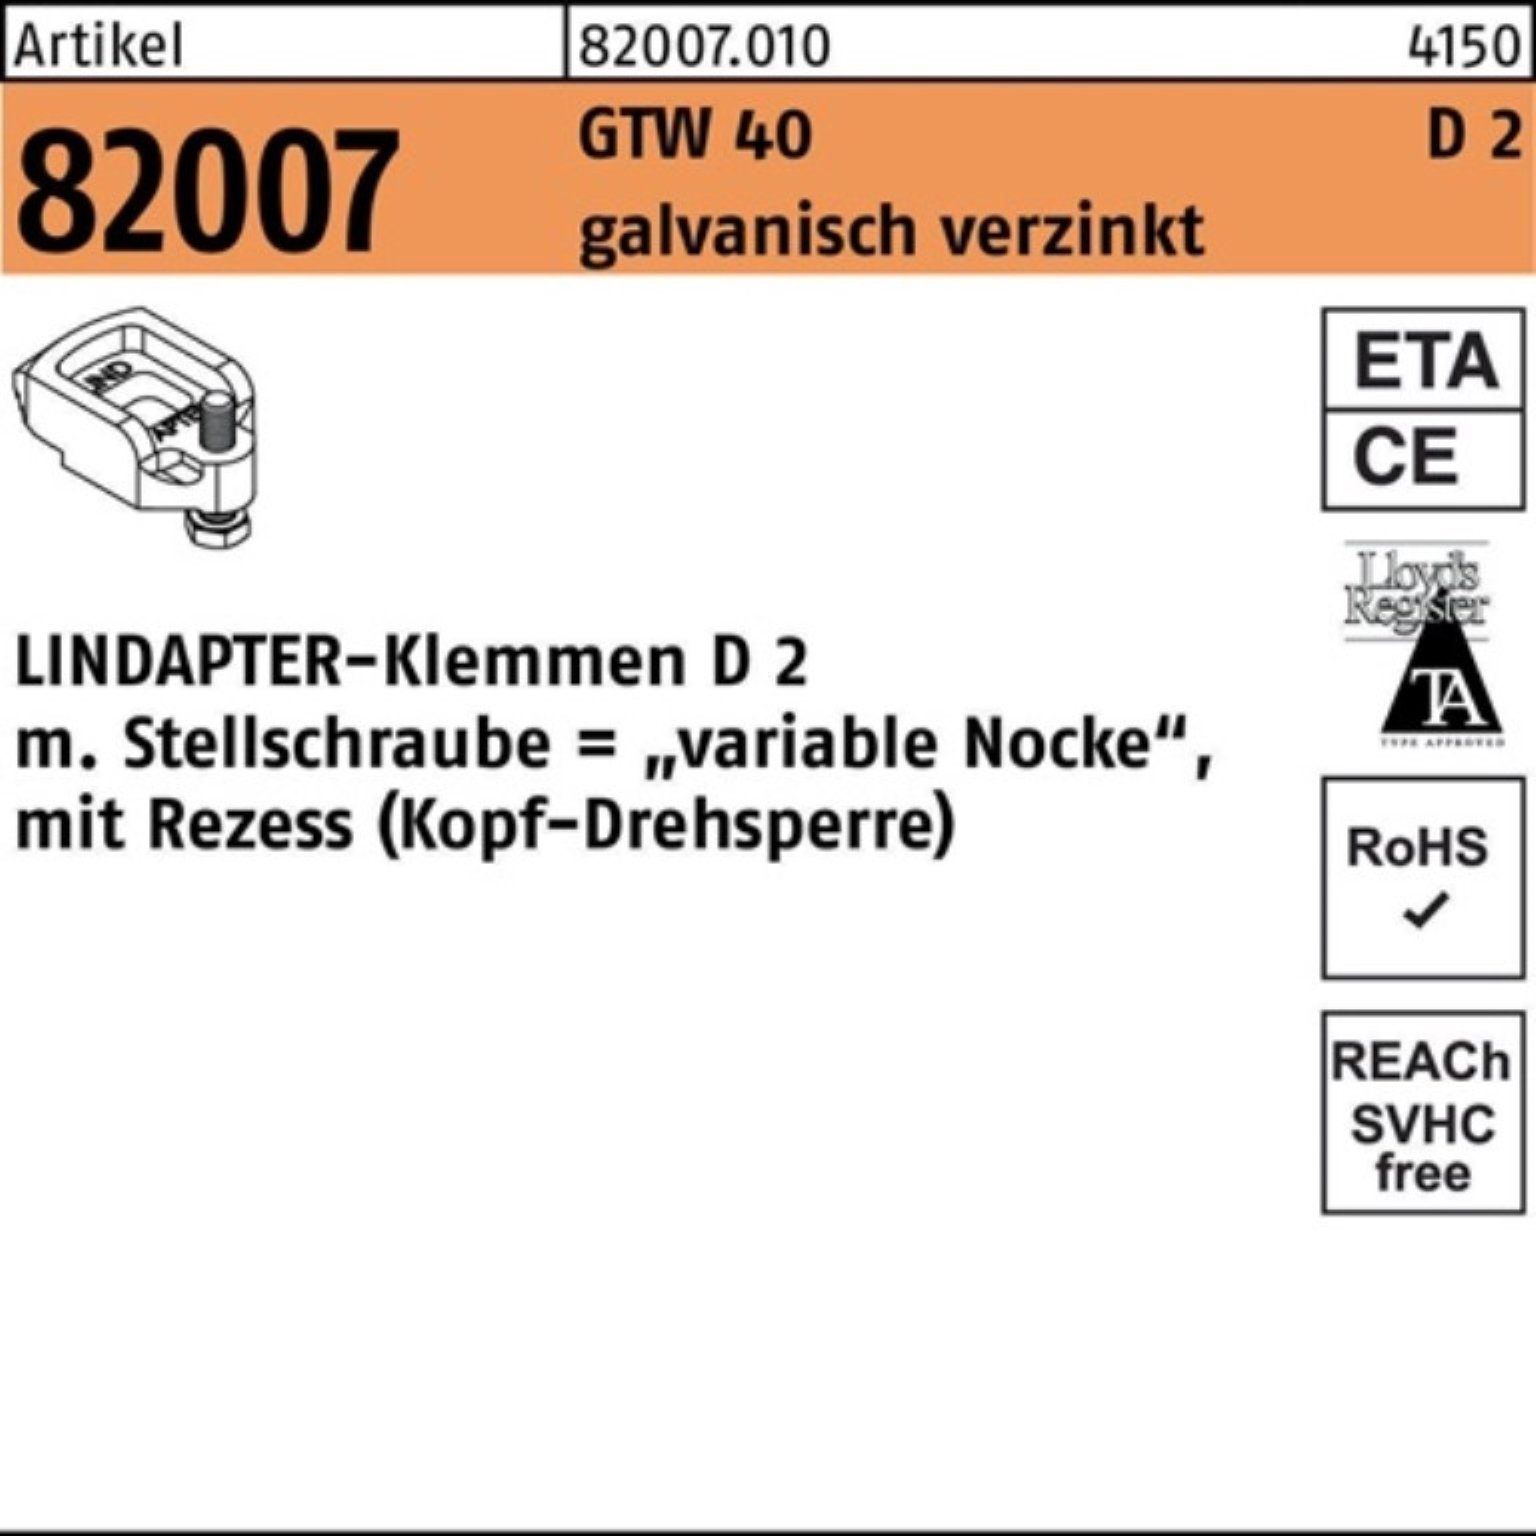 L - Pack Klemmen M20/17 galv.verz. Klemmen 40 24 82007 1 Stück GTW D2 Lindapter 100er R